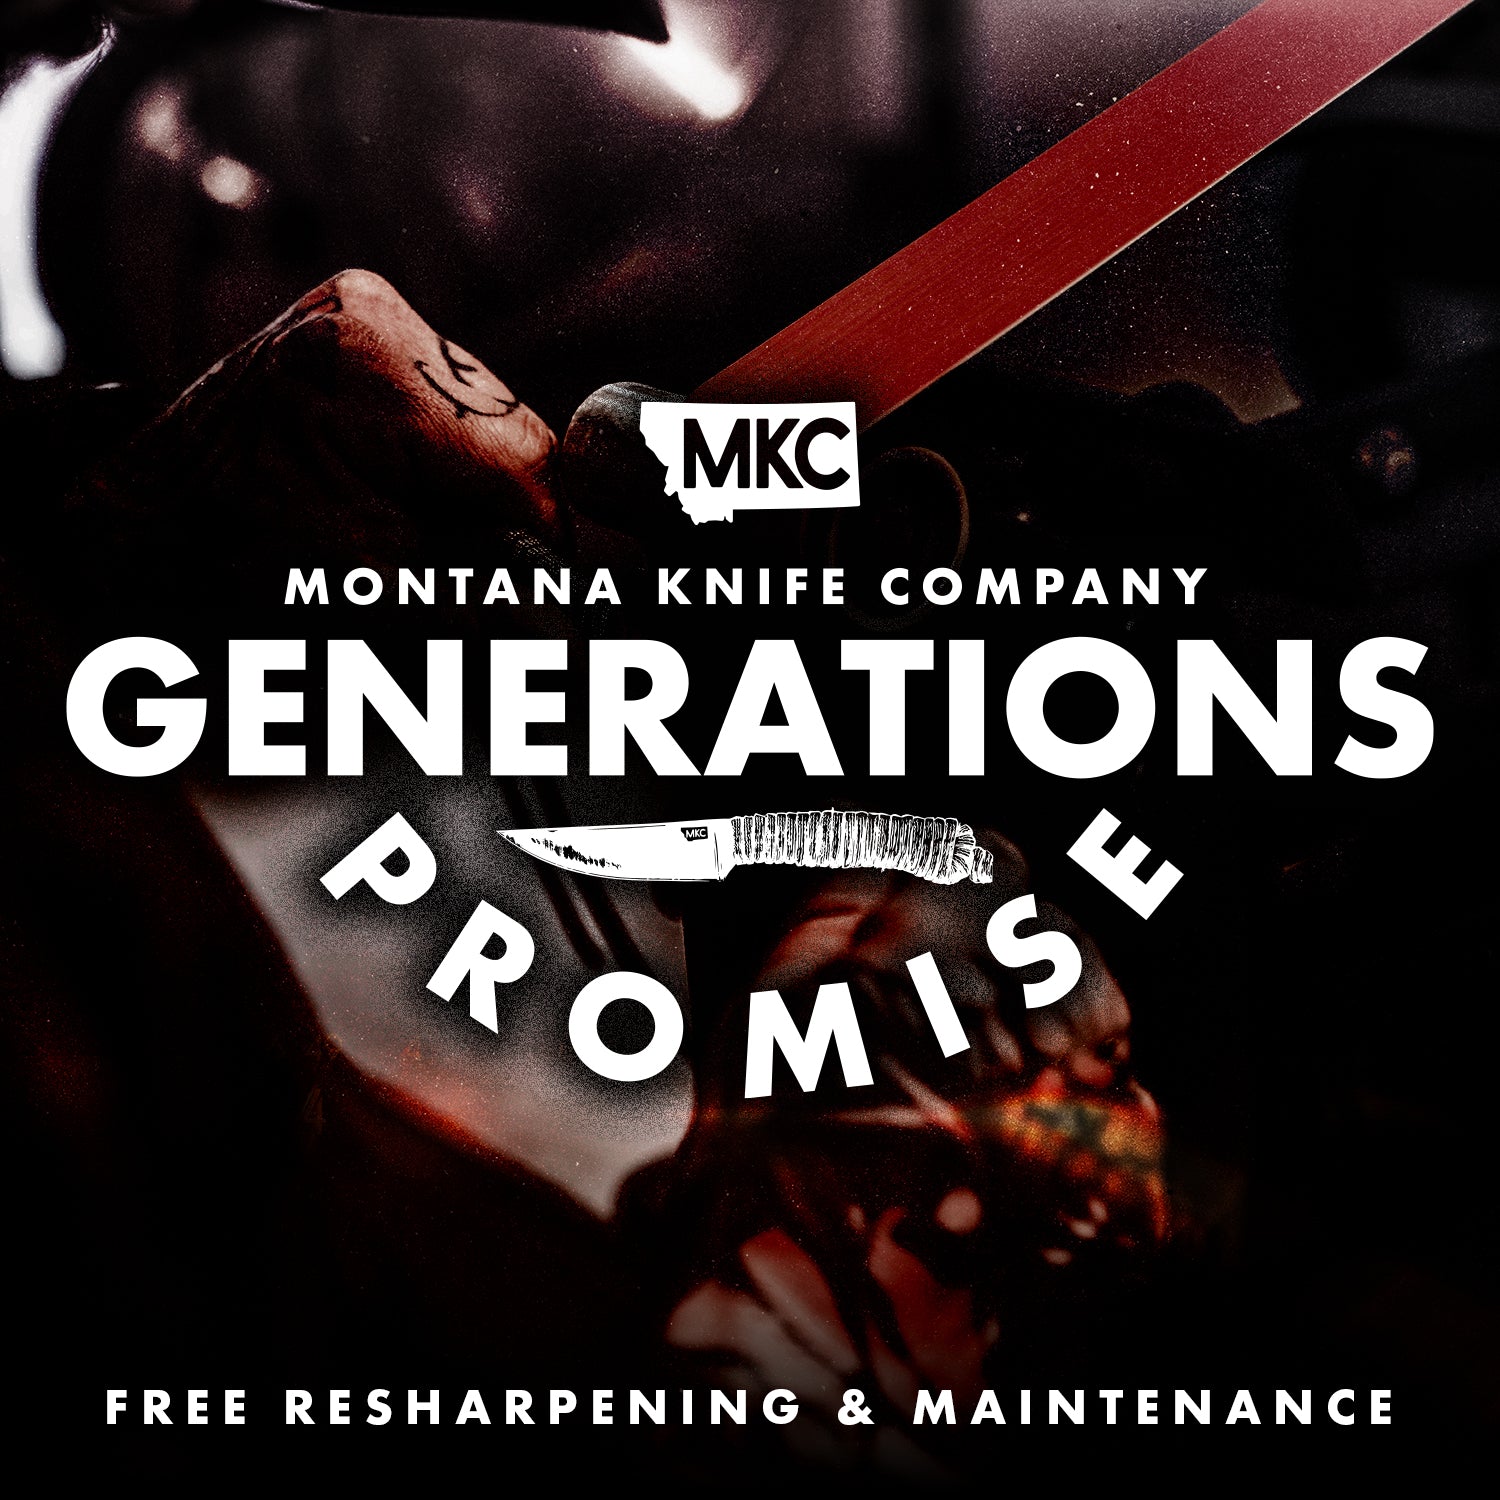 MKC GENERATIONS PROMISE - FREE RESHARPENING AND MAINTENANCE